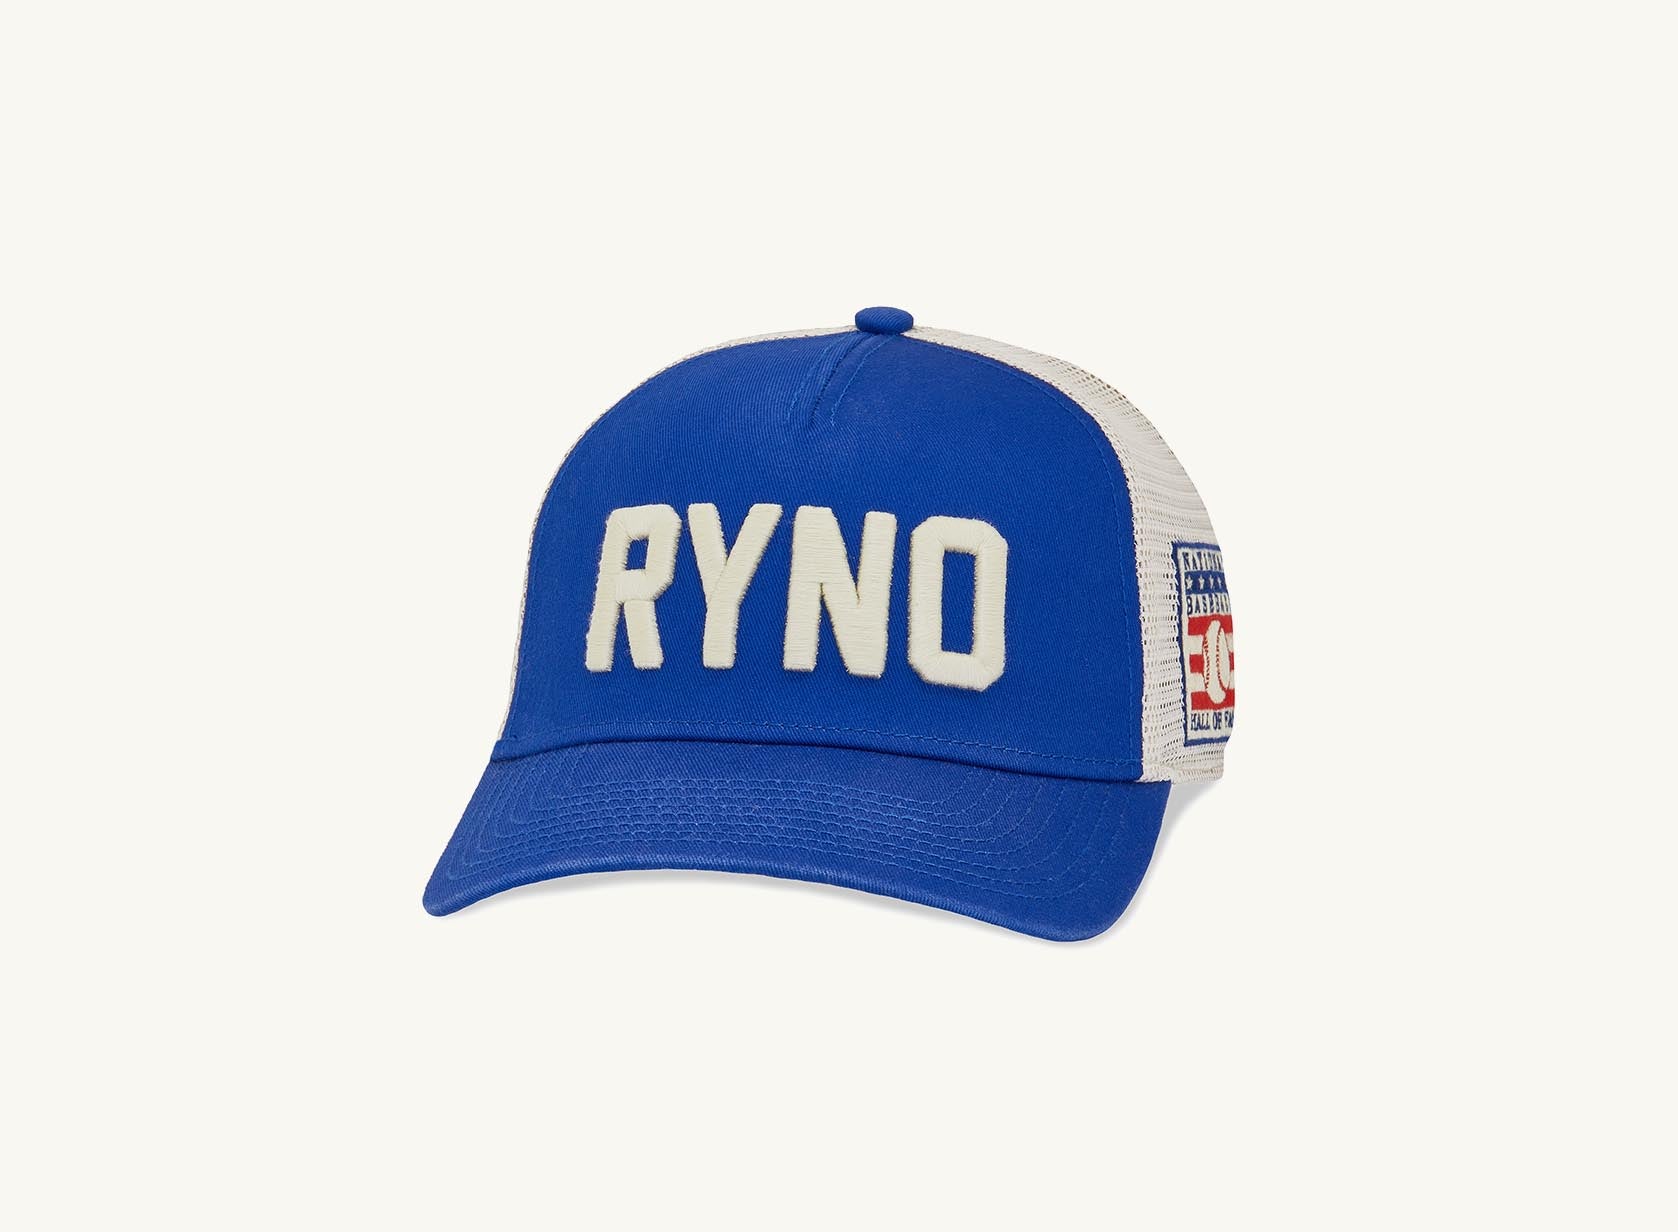 23 Ryne Sandberg “Ryno” – Wright & Ditson